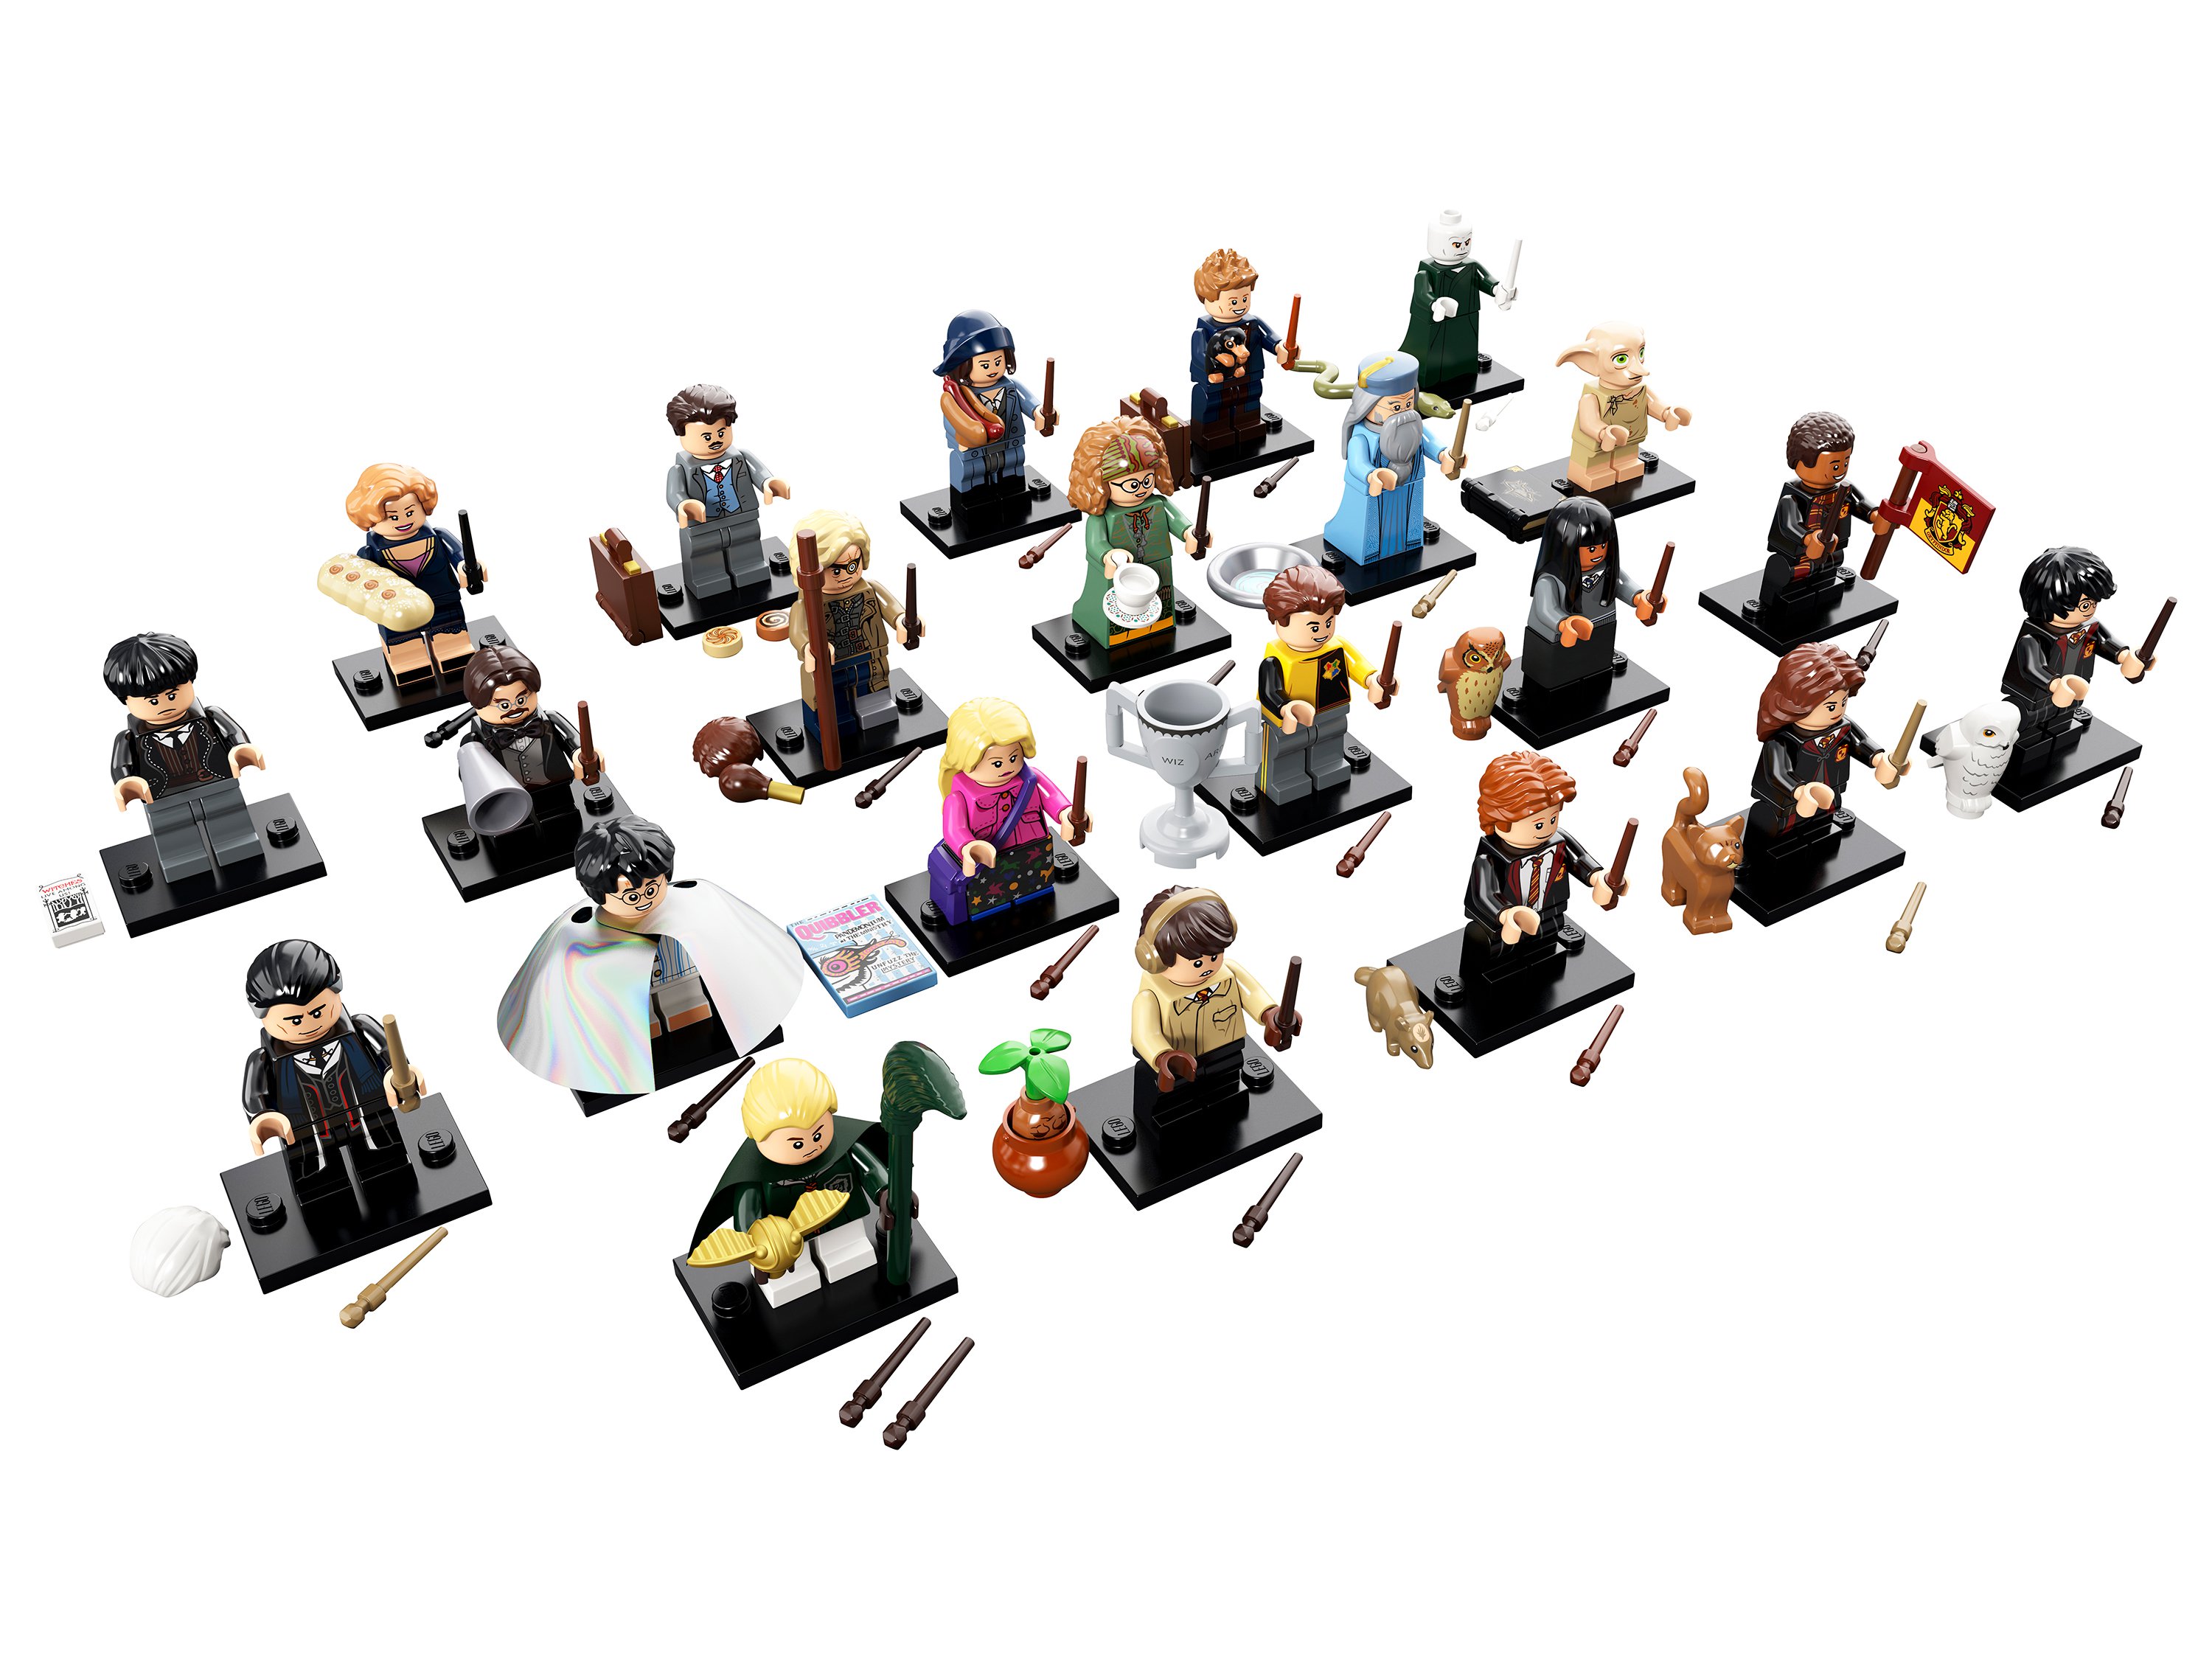 Lego Minifigures 71022-14 Невилл Долгопупс